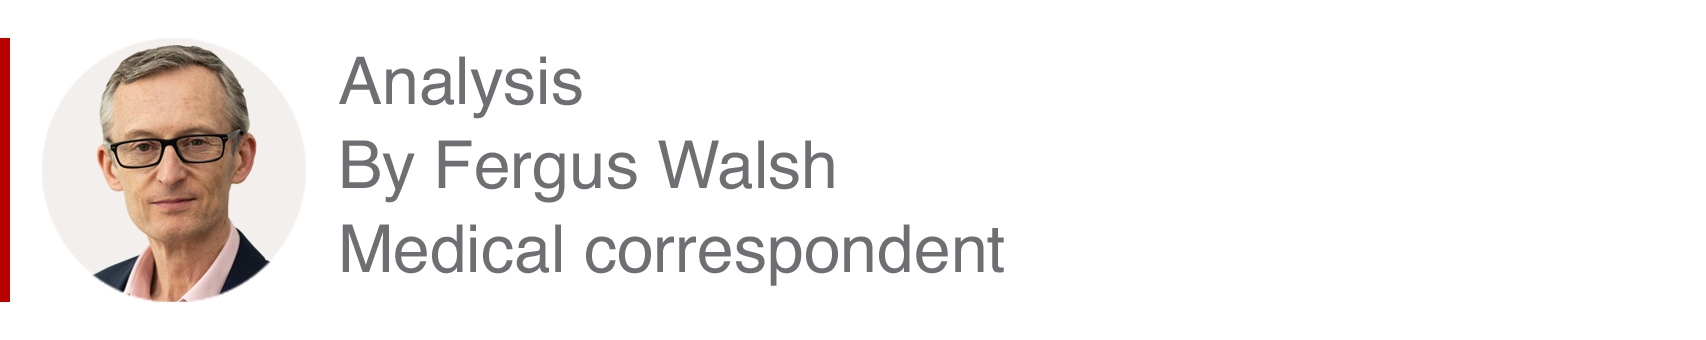 Analysis box by Fergus Walsh, medical correspondent